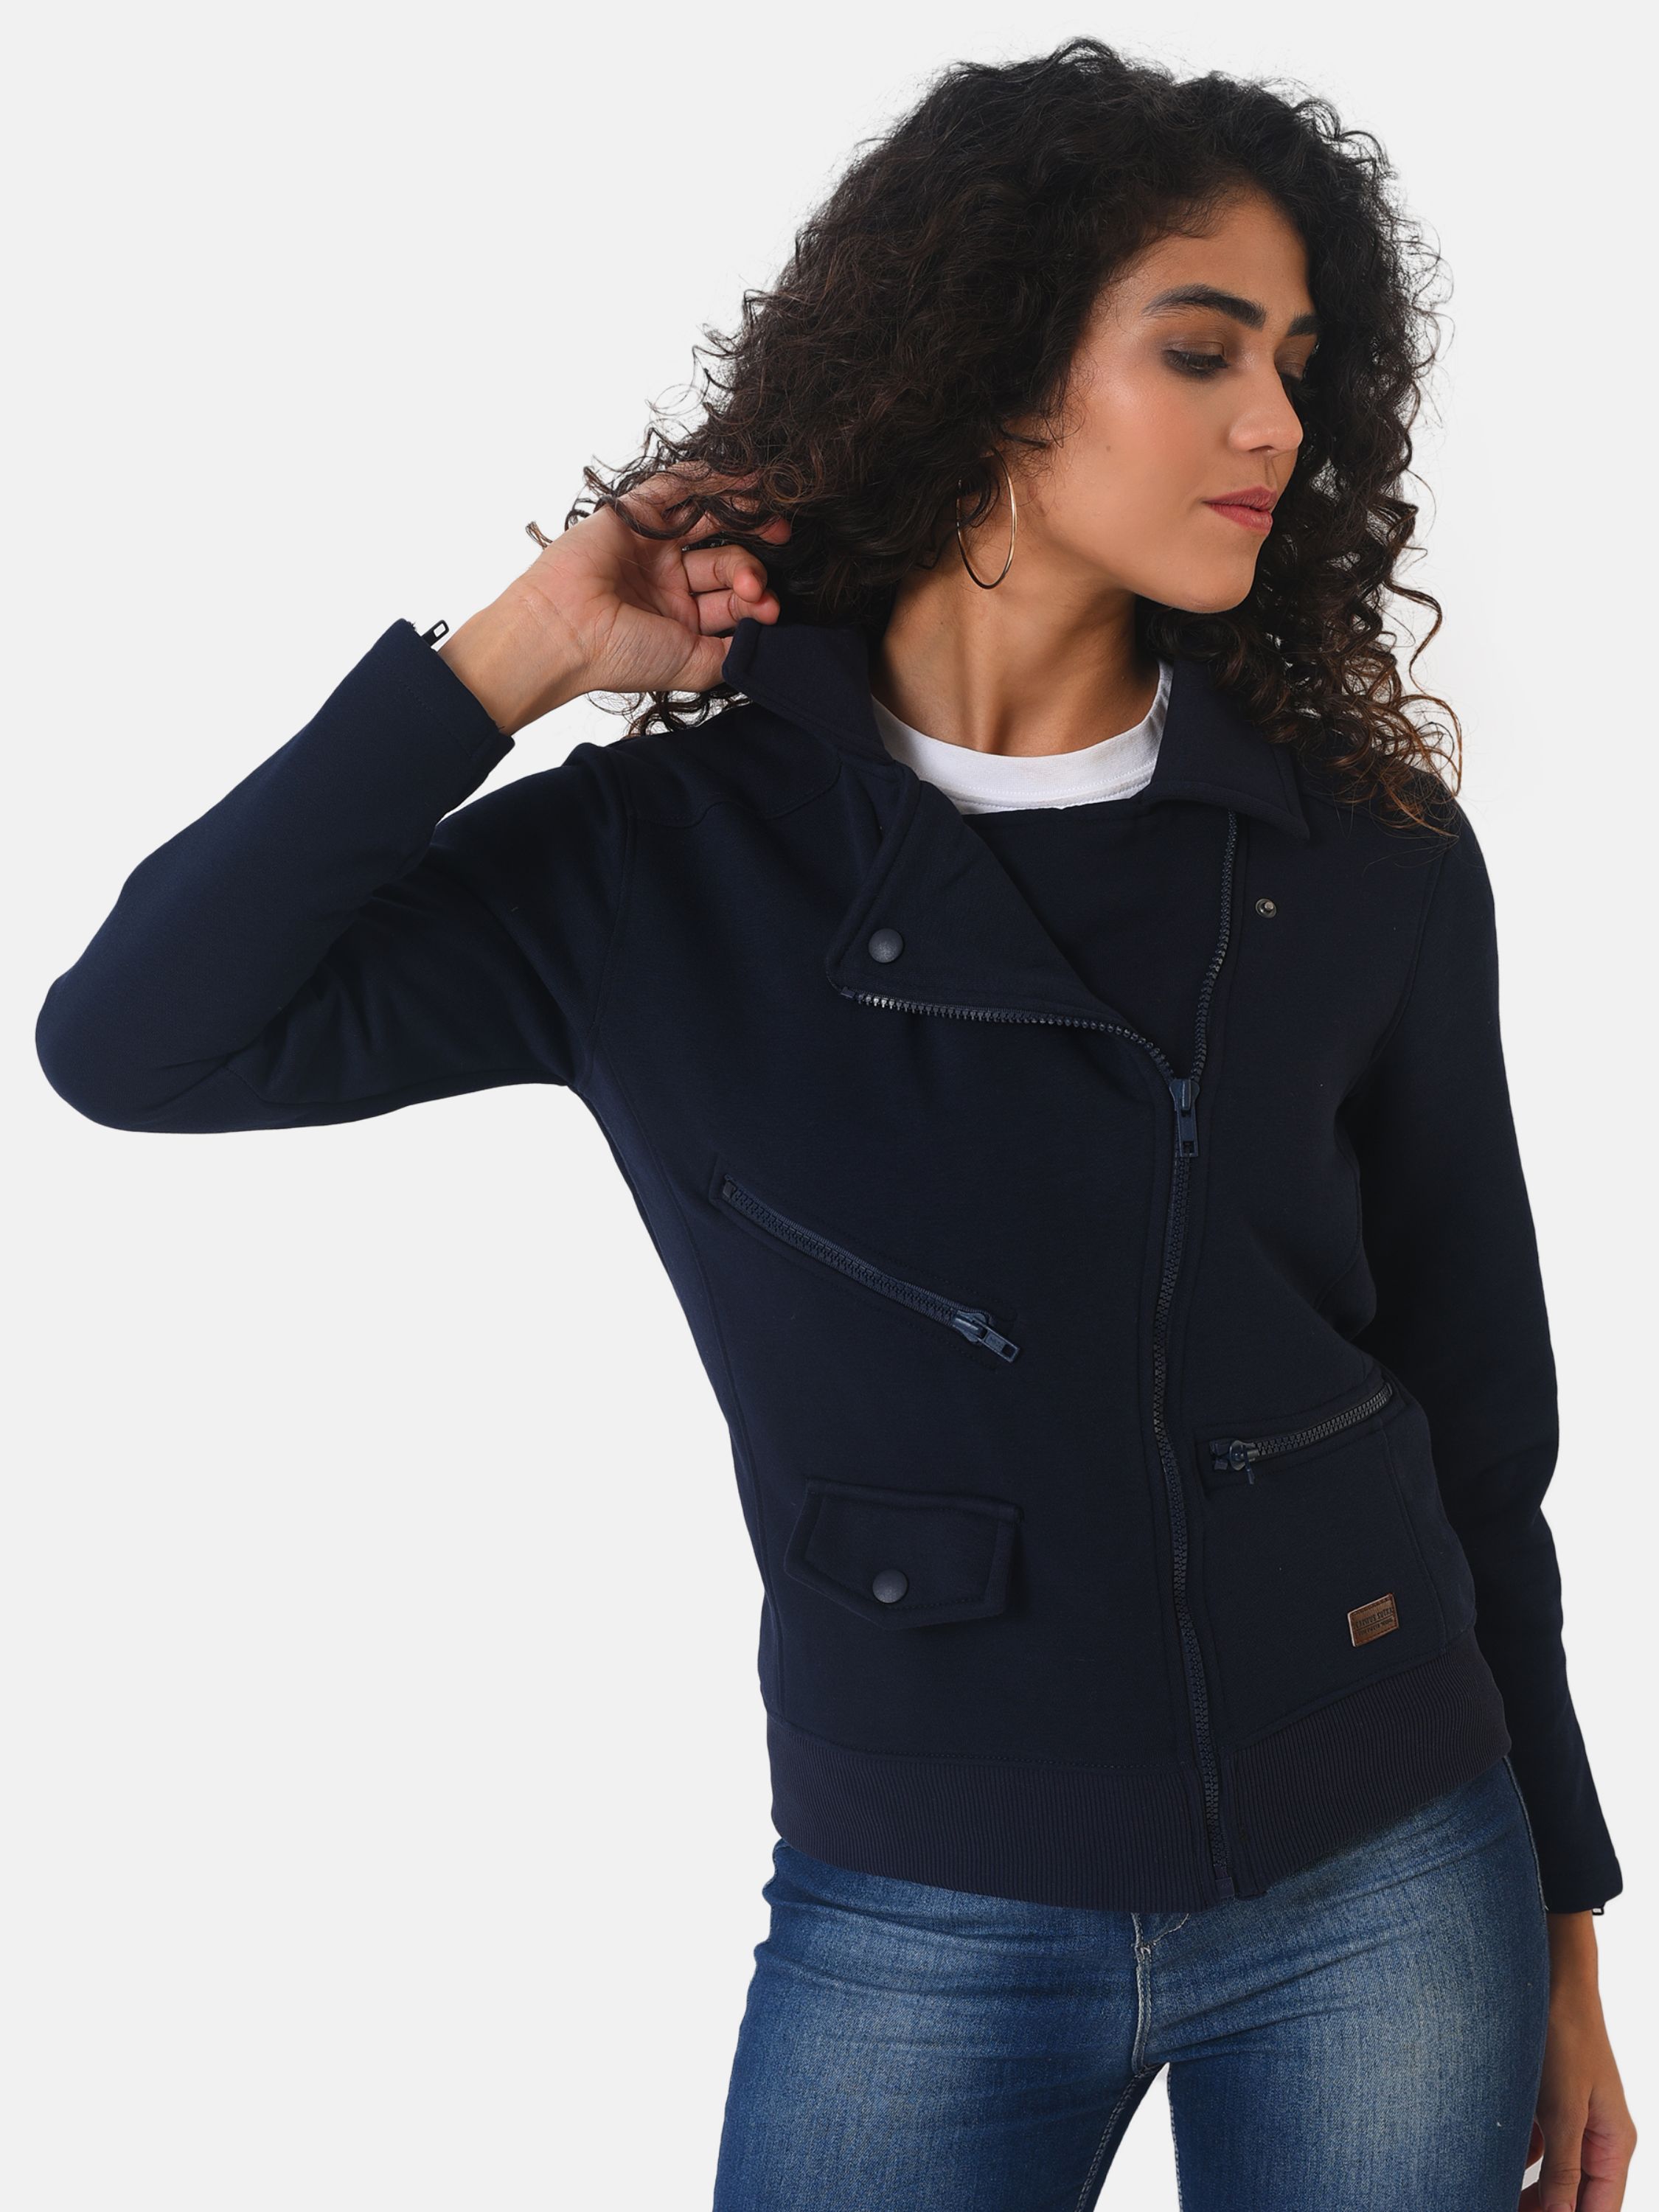 Women Solid Stylish Casual Jacket